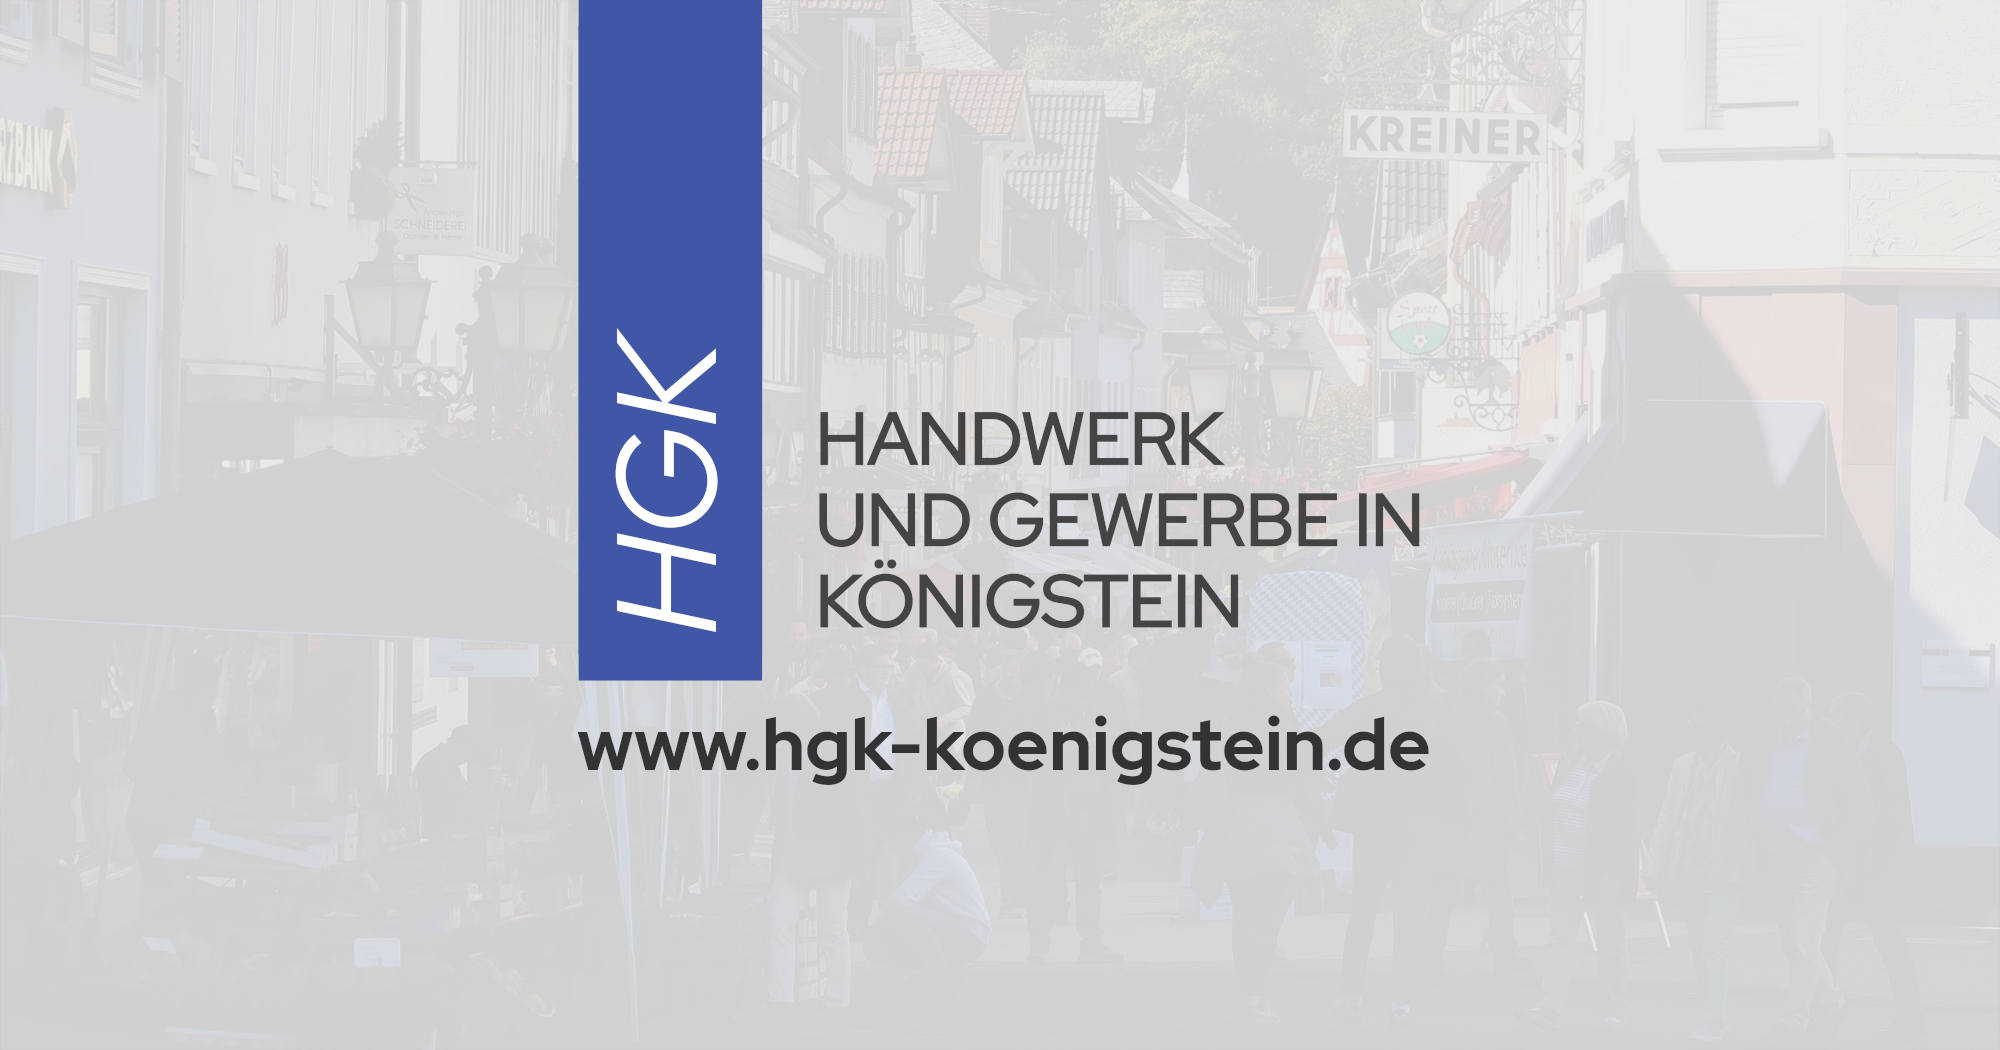 (c) Hgk-koenigstein.de